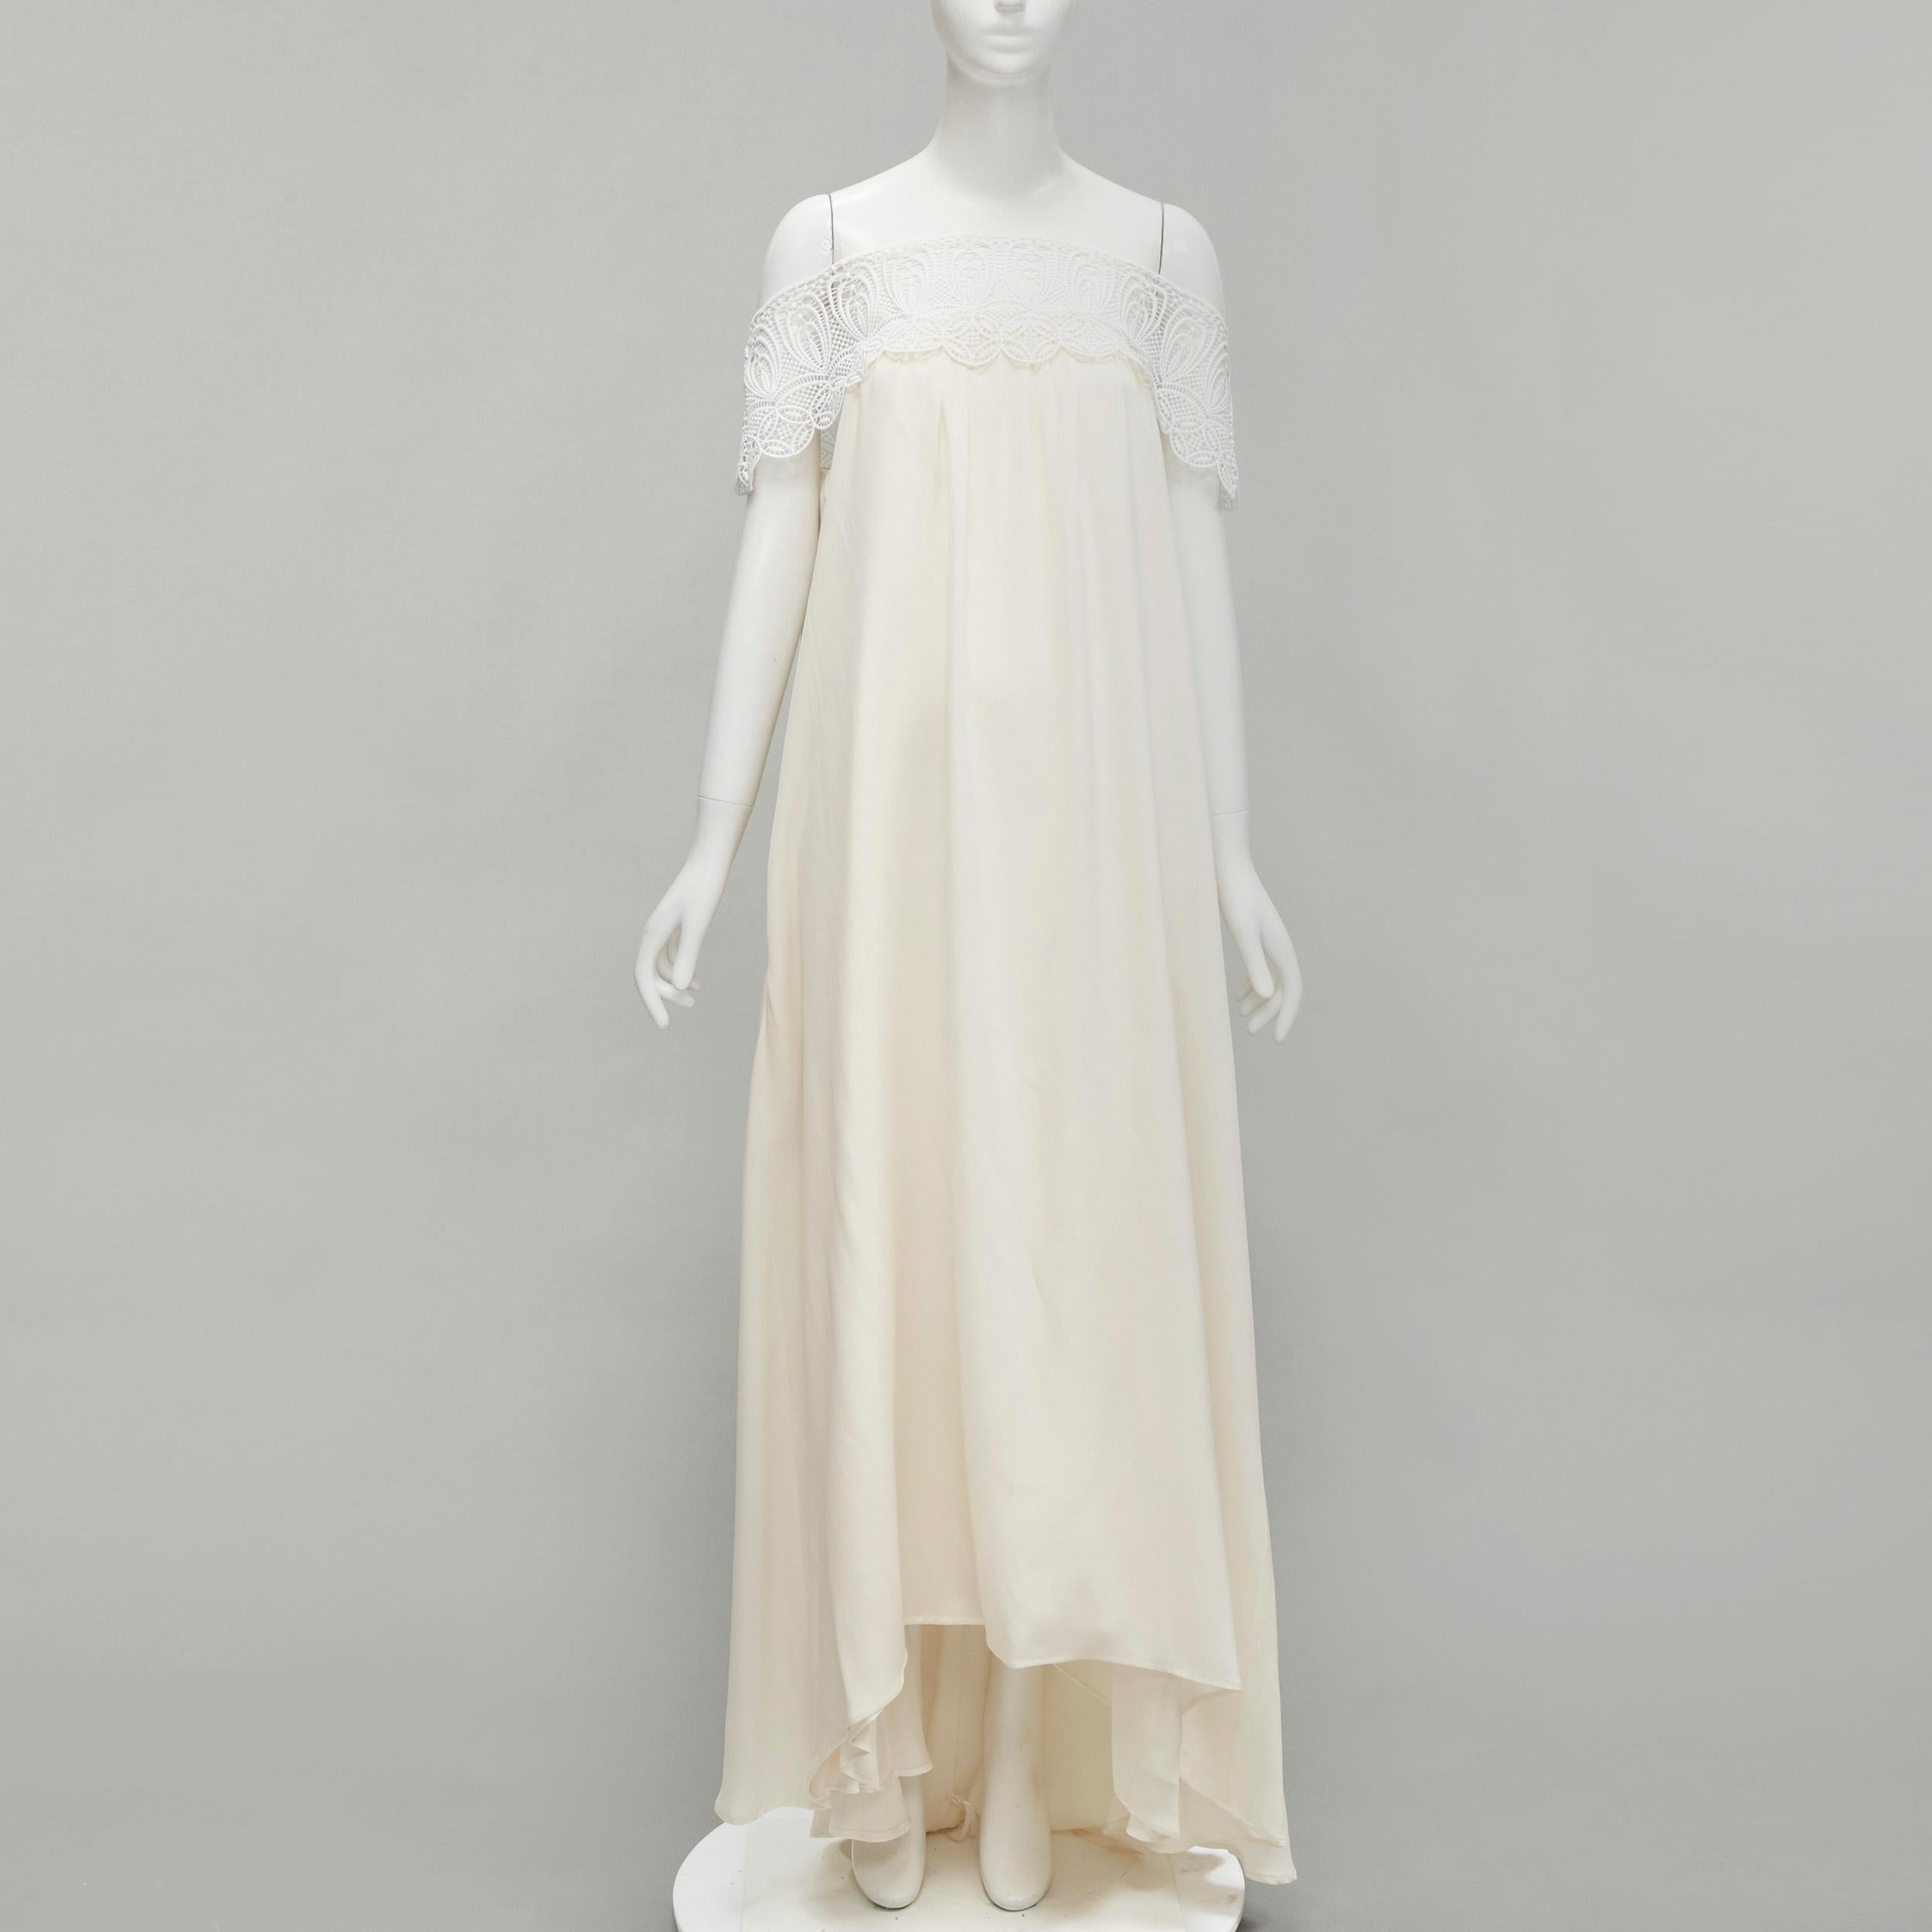 new SELF PORTRAIT cream lace detail off shoulder wedding dress UK10 M For Sale